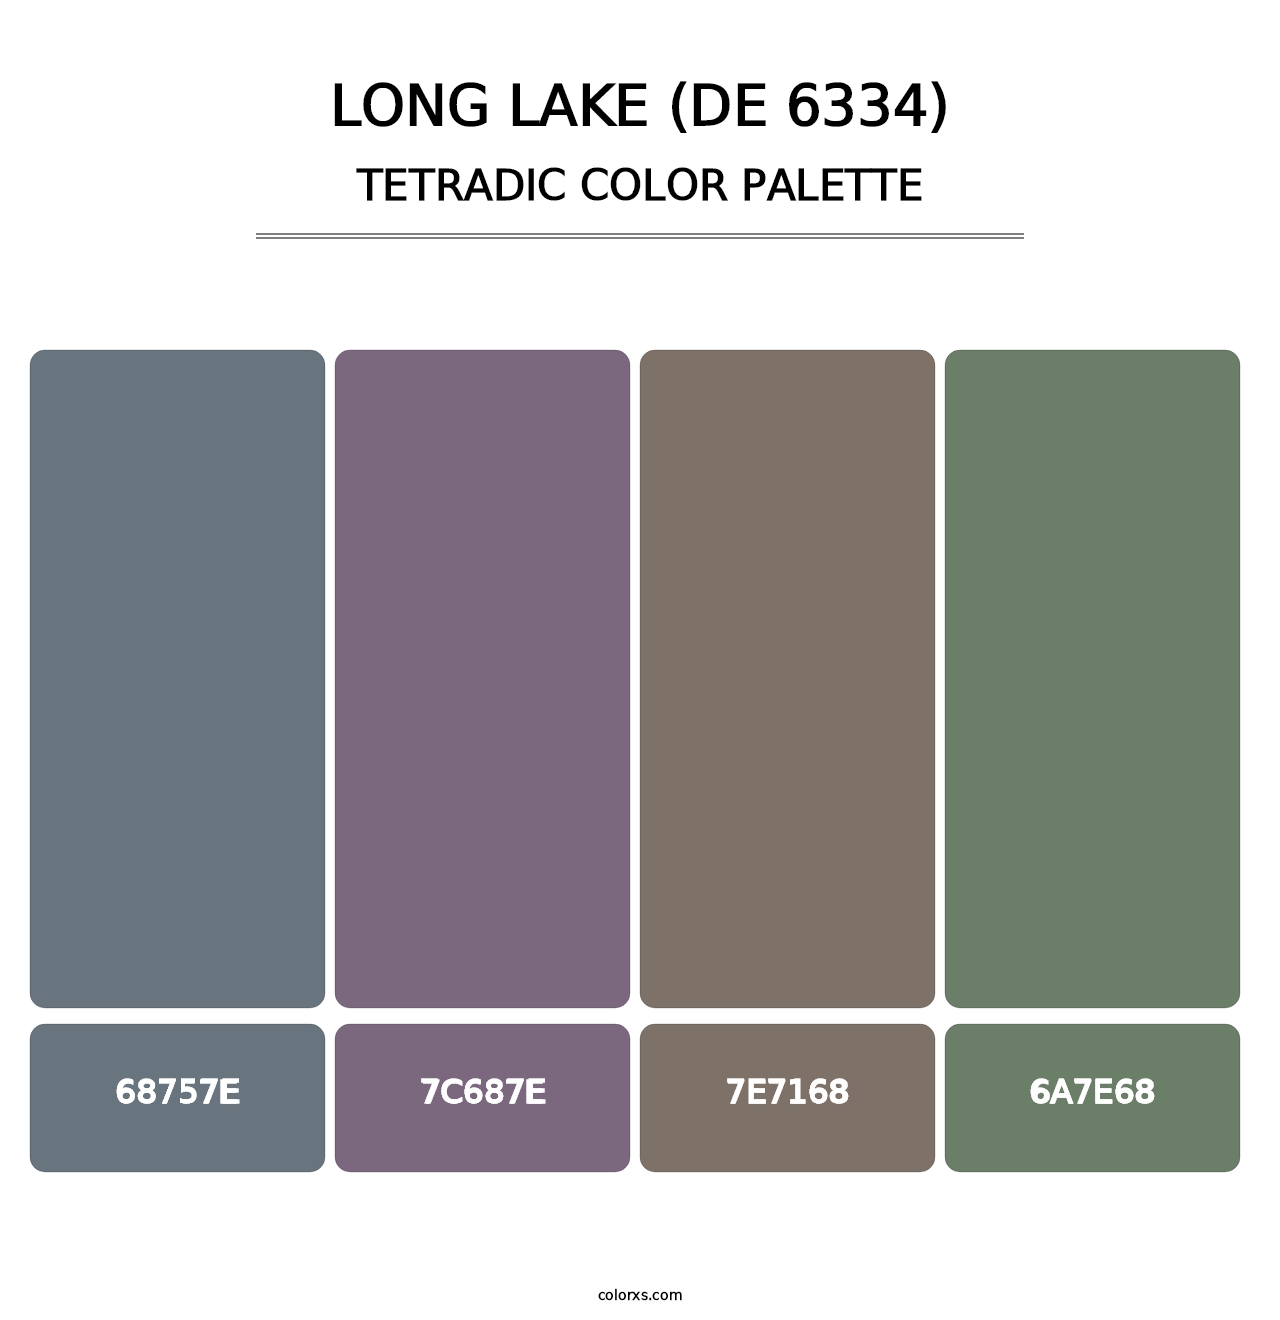 Long Lake (DE 6334) - Tetradic Color Palette